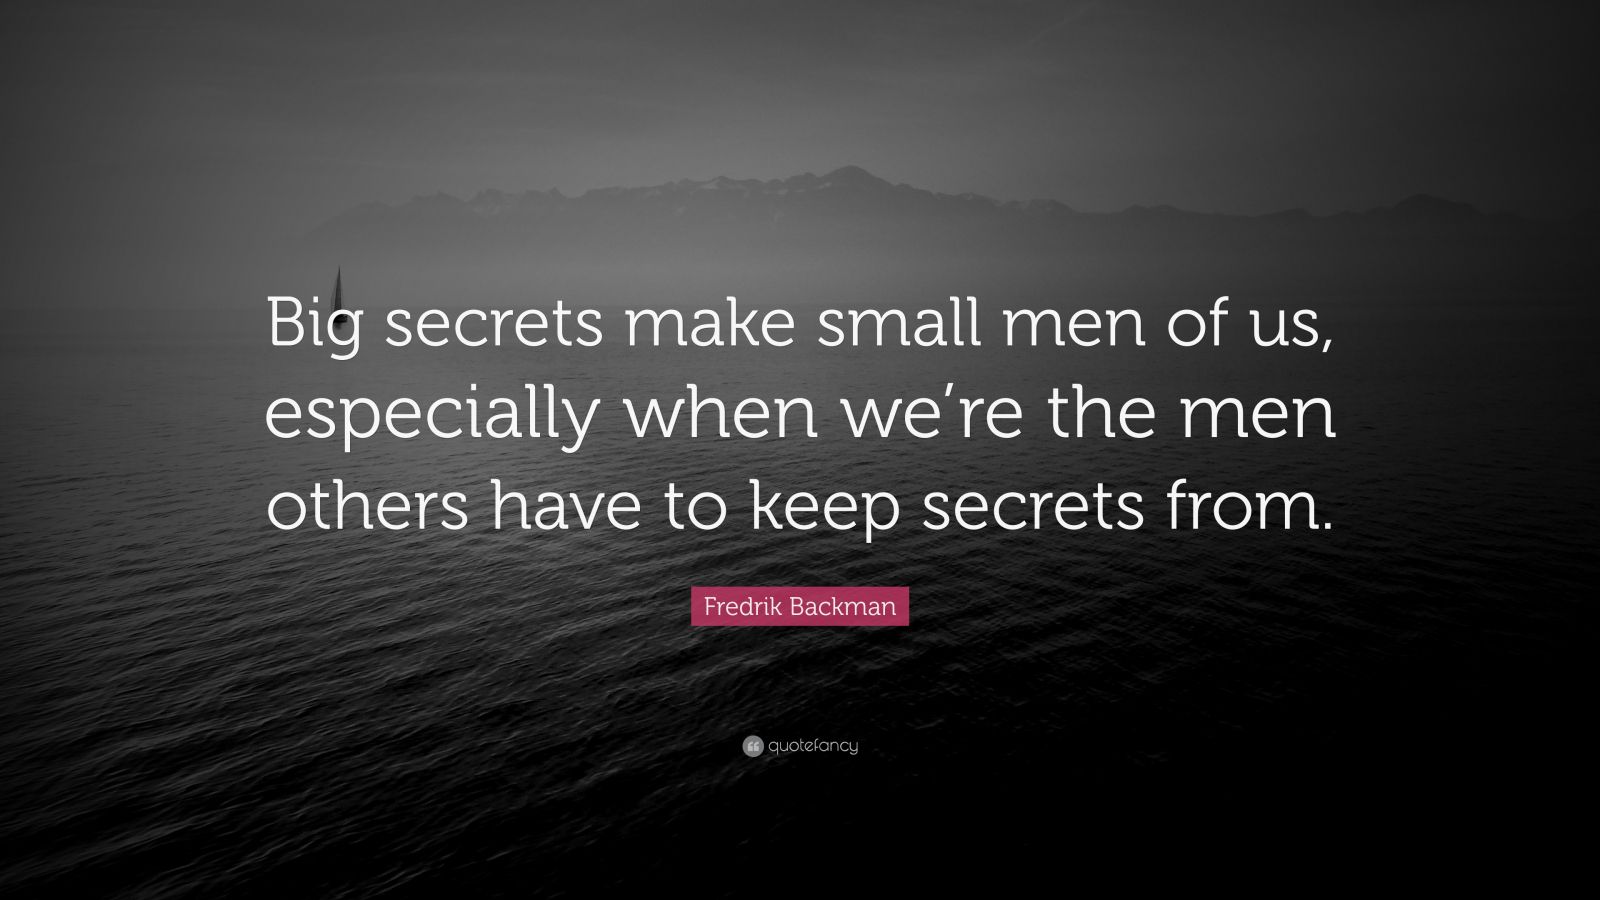 Fredrik Backman Quote: “Big secrets make small men of us, especially ...